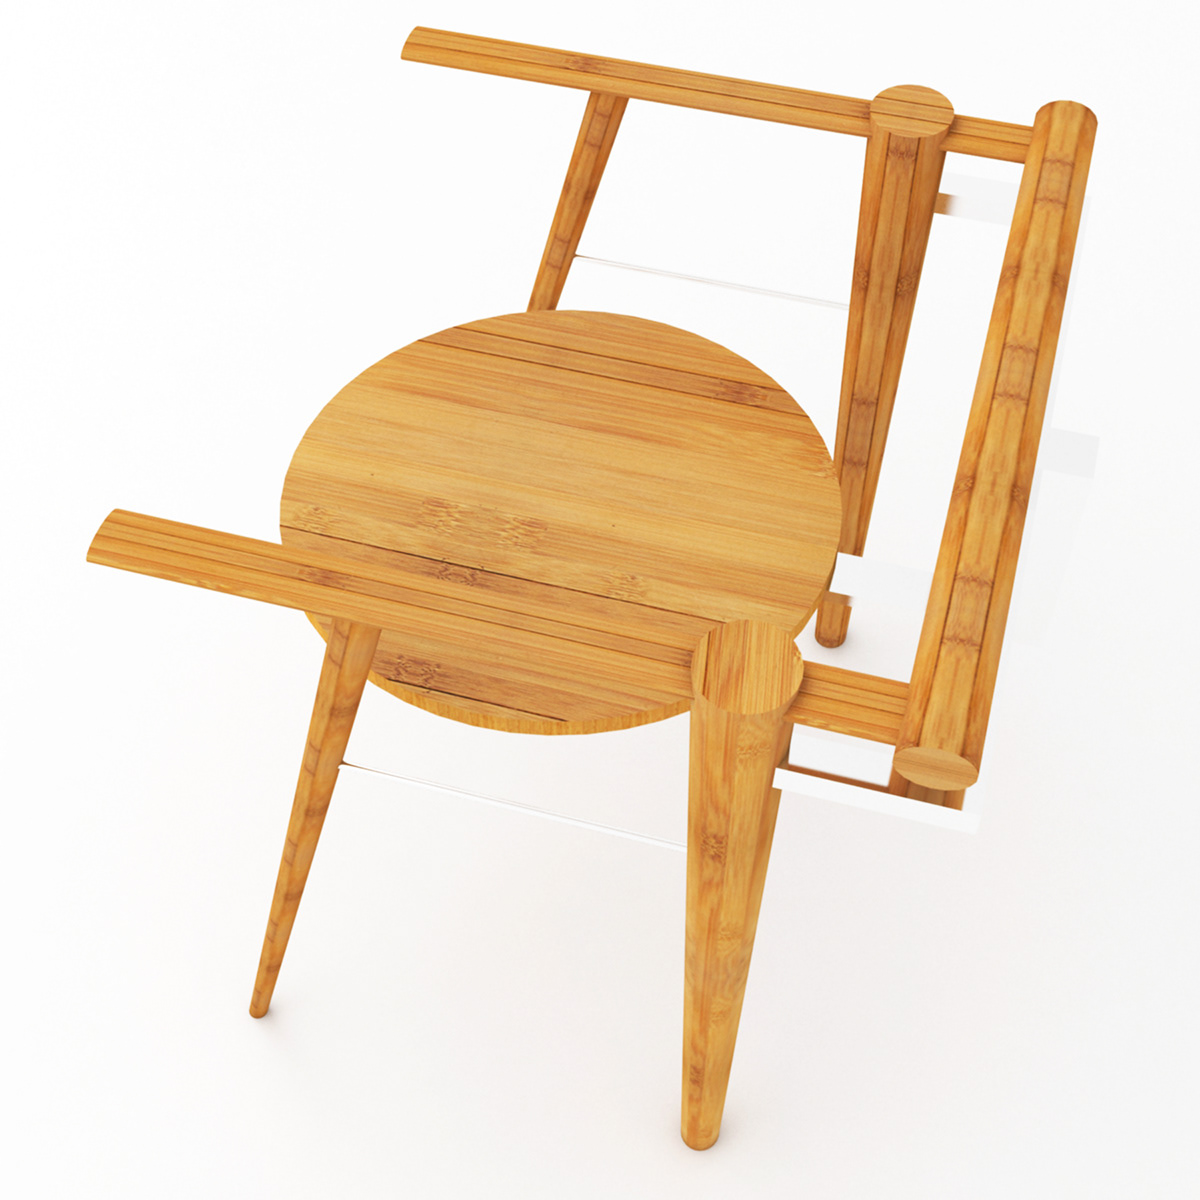 floating chair kevin elika runnerup runner up Interior designer design uph Universitas pelita harapan adesignaward award